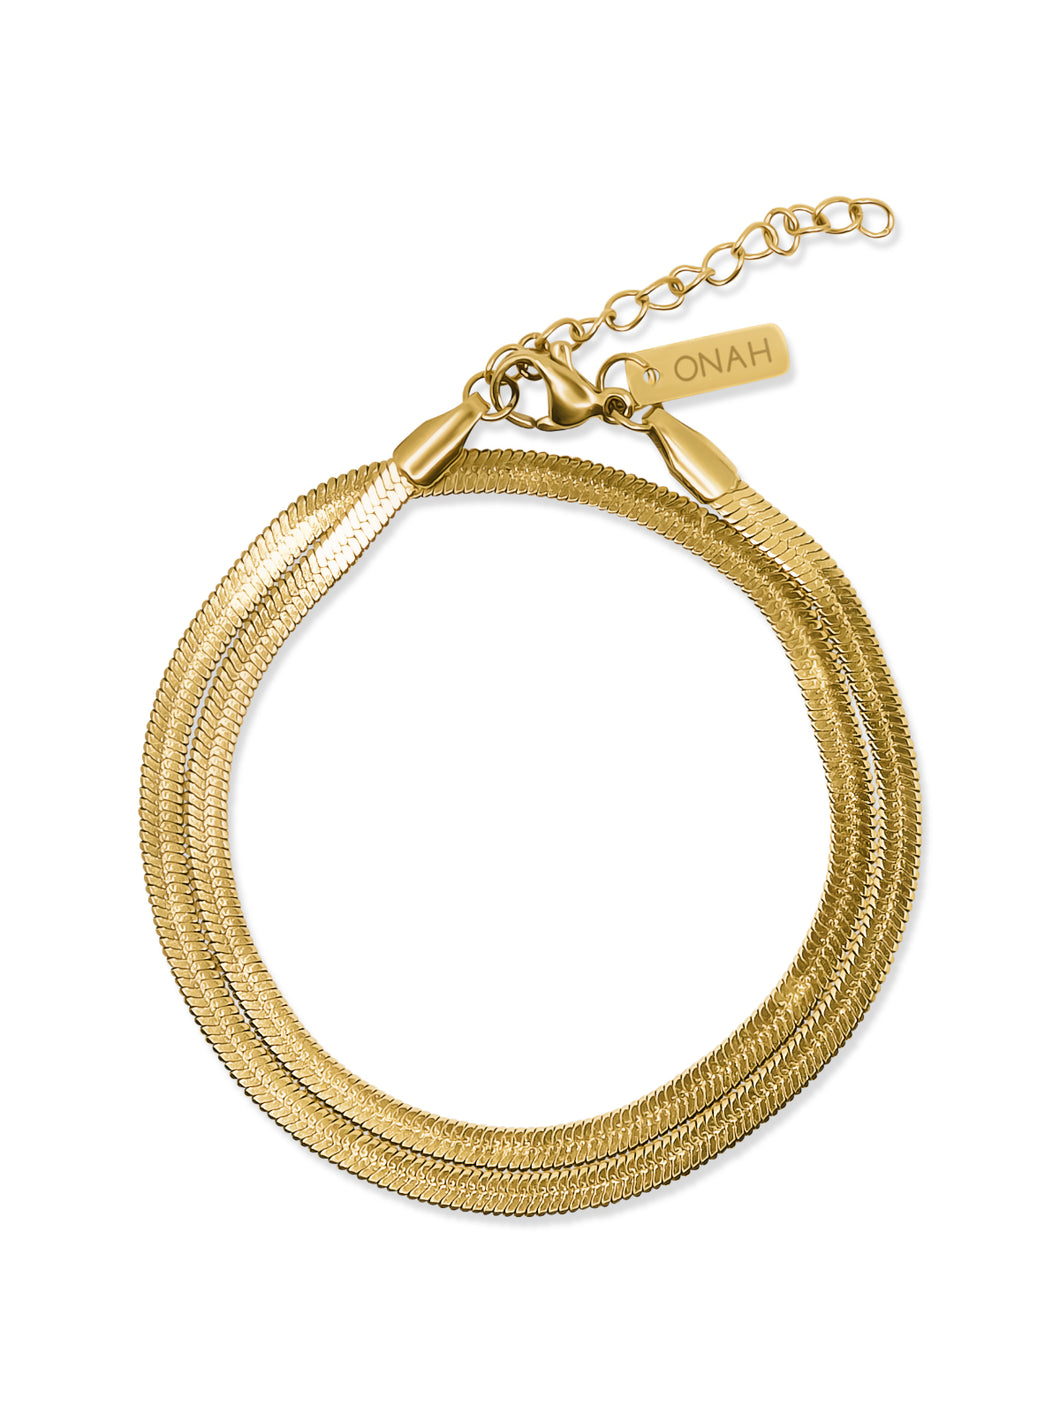 double looped golden bracelet - doppeltes goldenes Armband - pulsera de oro doble